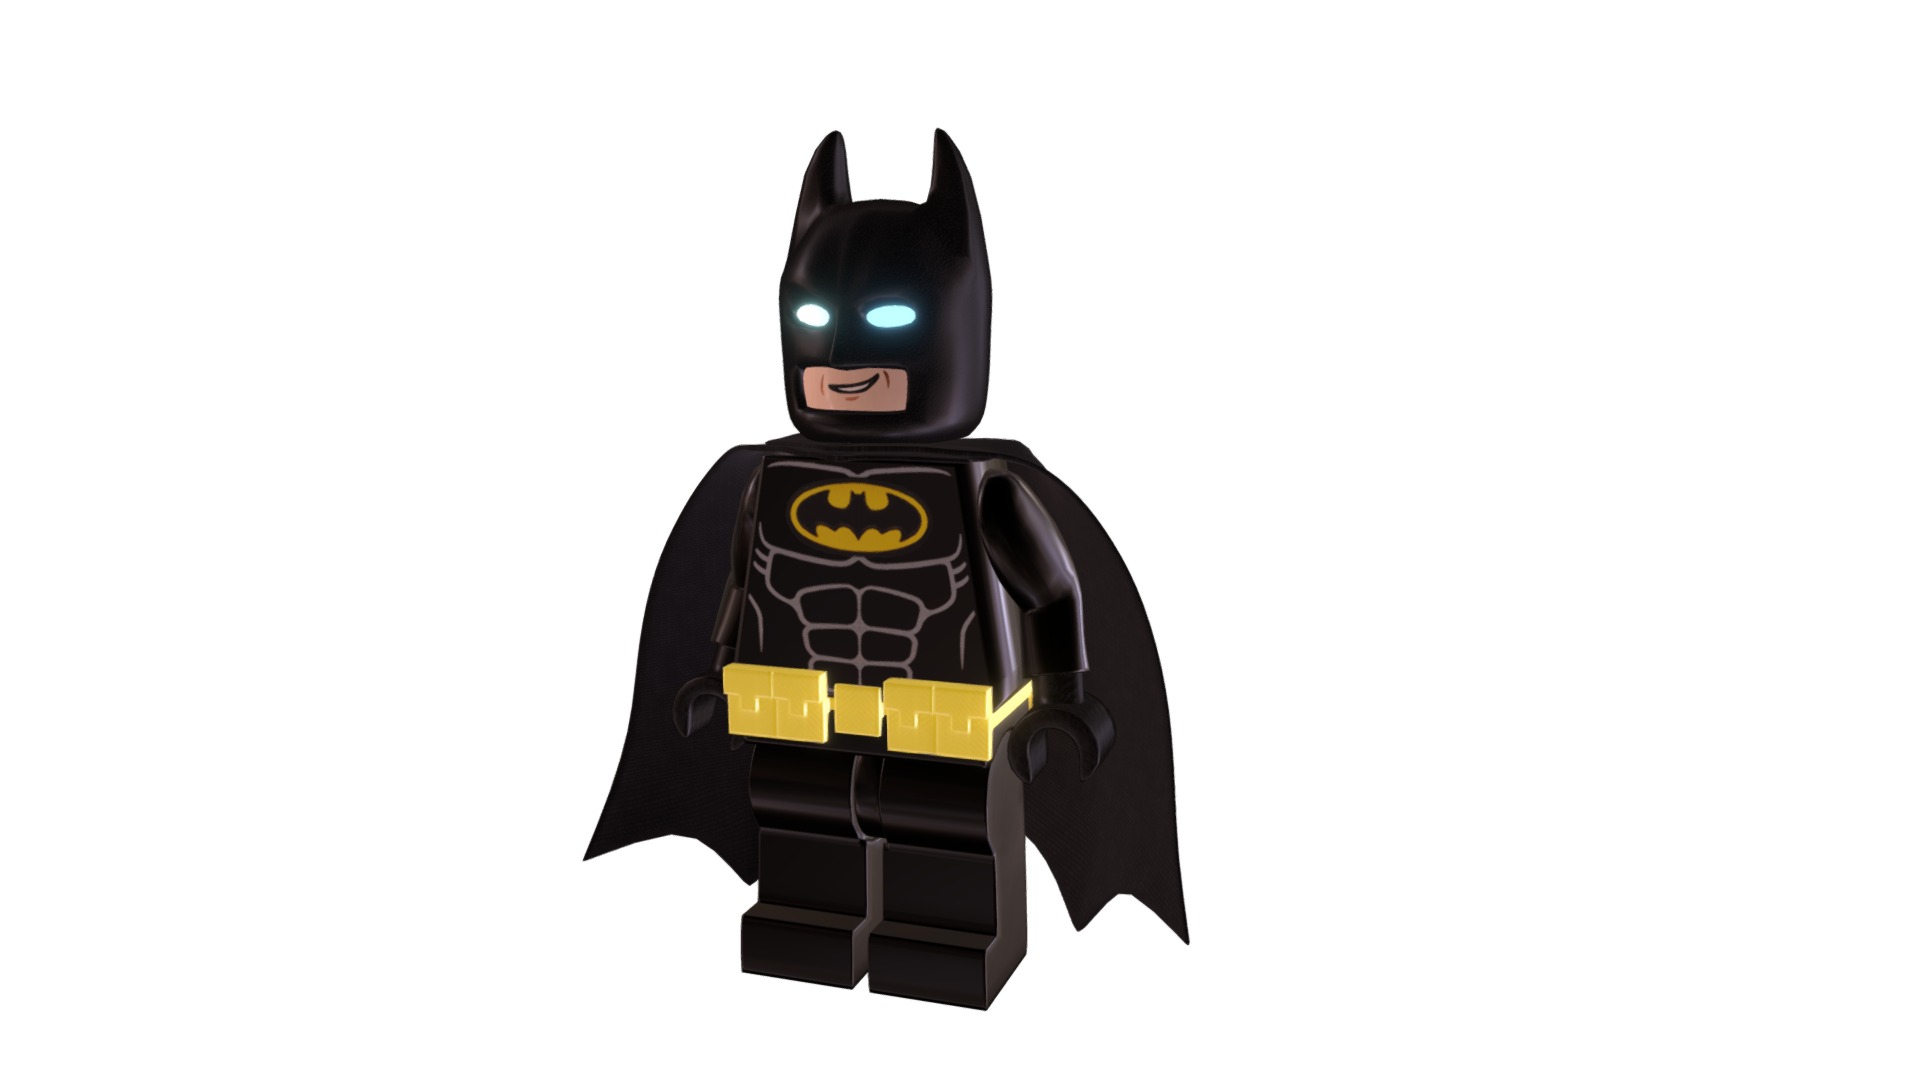 The one and only Lego Batman;-) made in Blender - Lego Batman - 3D model by sorenfroststaal 3d model